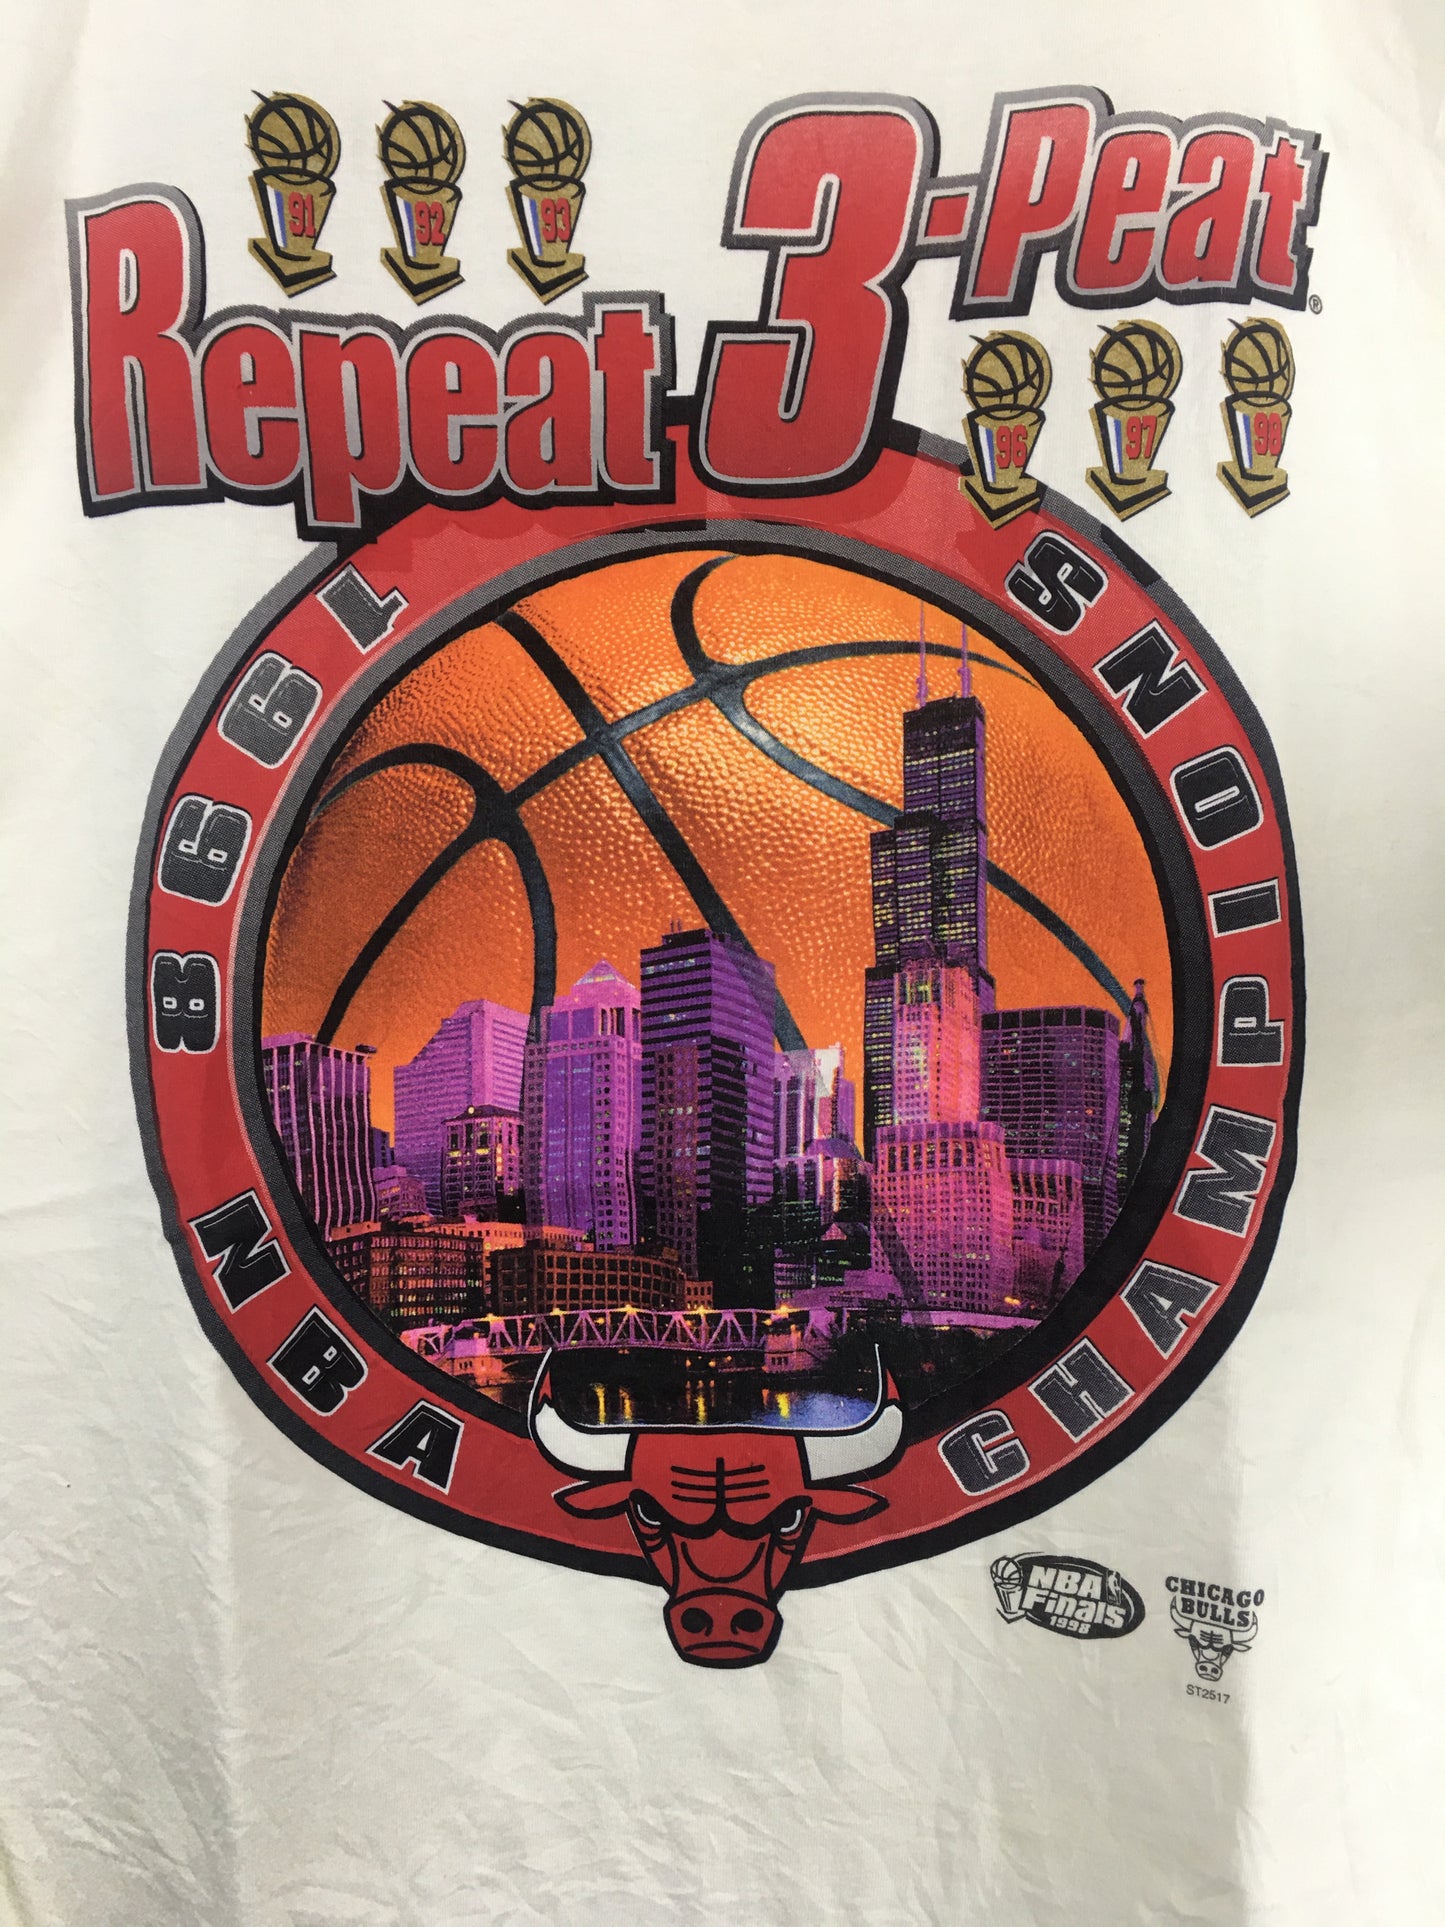 Vintage Chicago Bulls Repeat 3-Peat NBA Champion 1998 T-shirt (Deadstock)